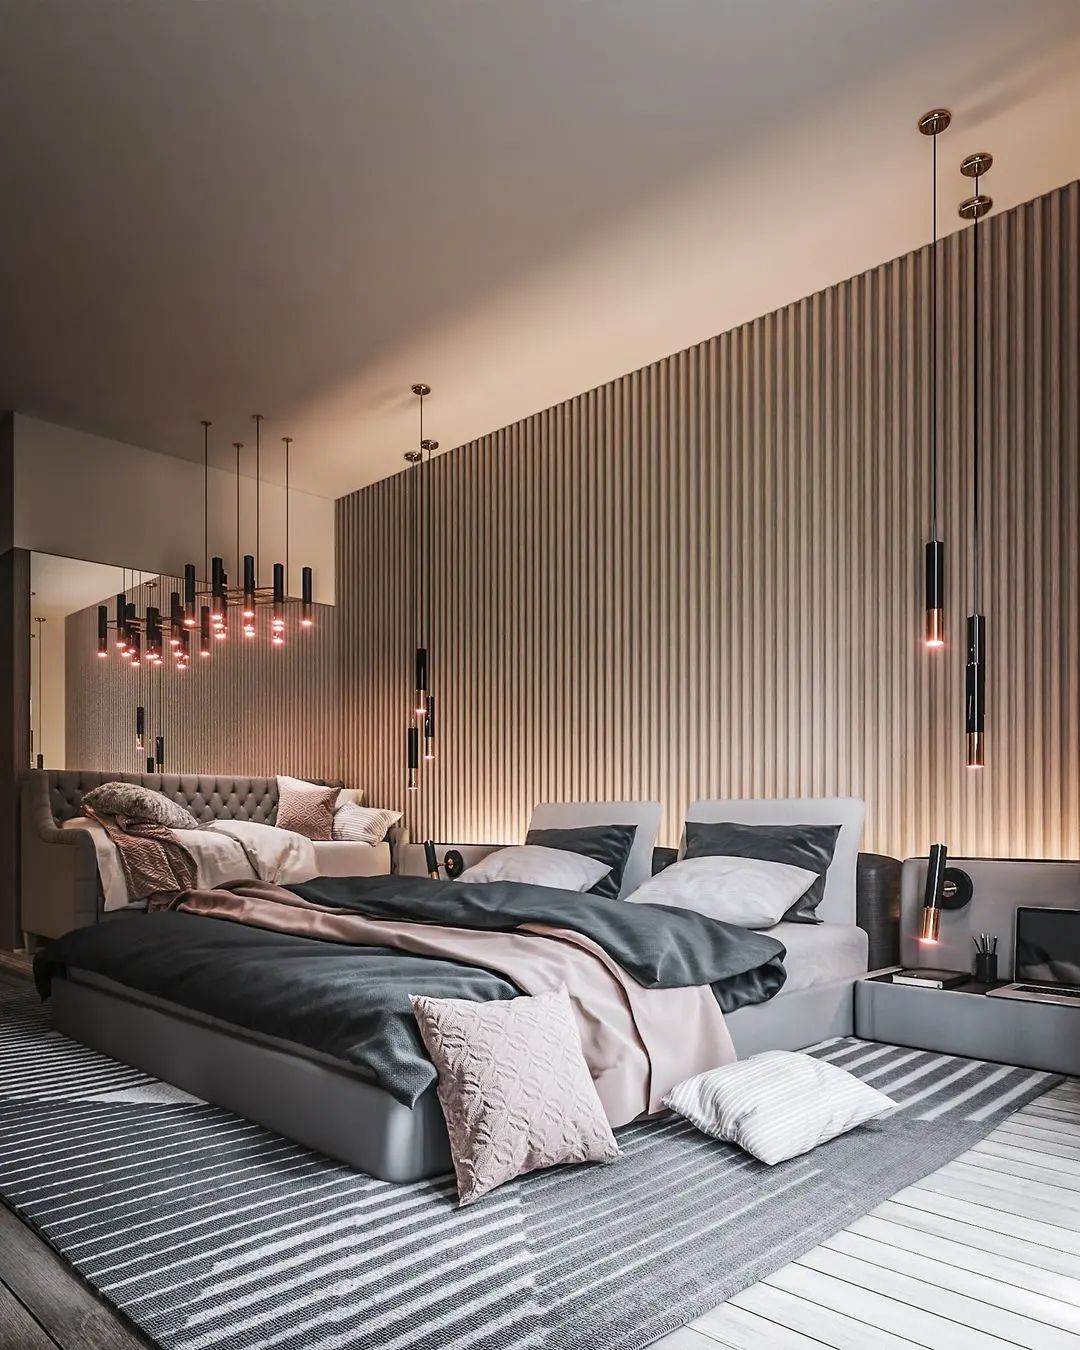 Cozy Loft Bedroom Decor